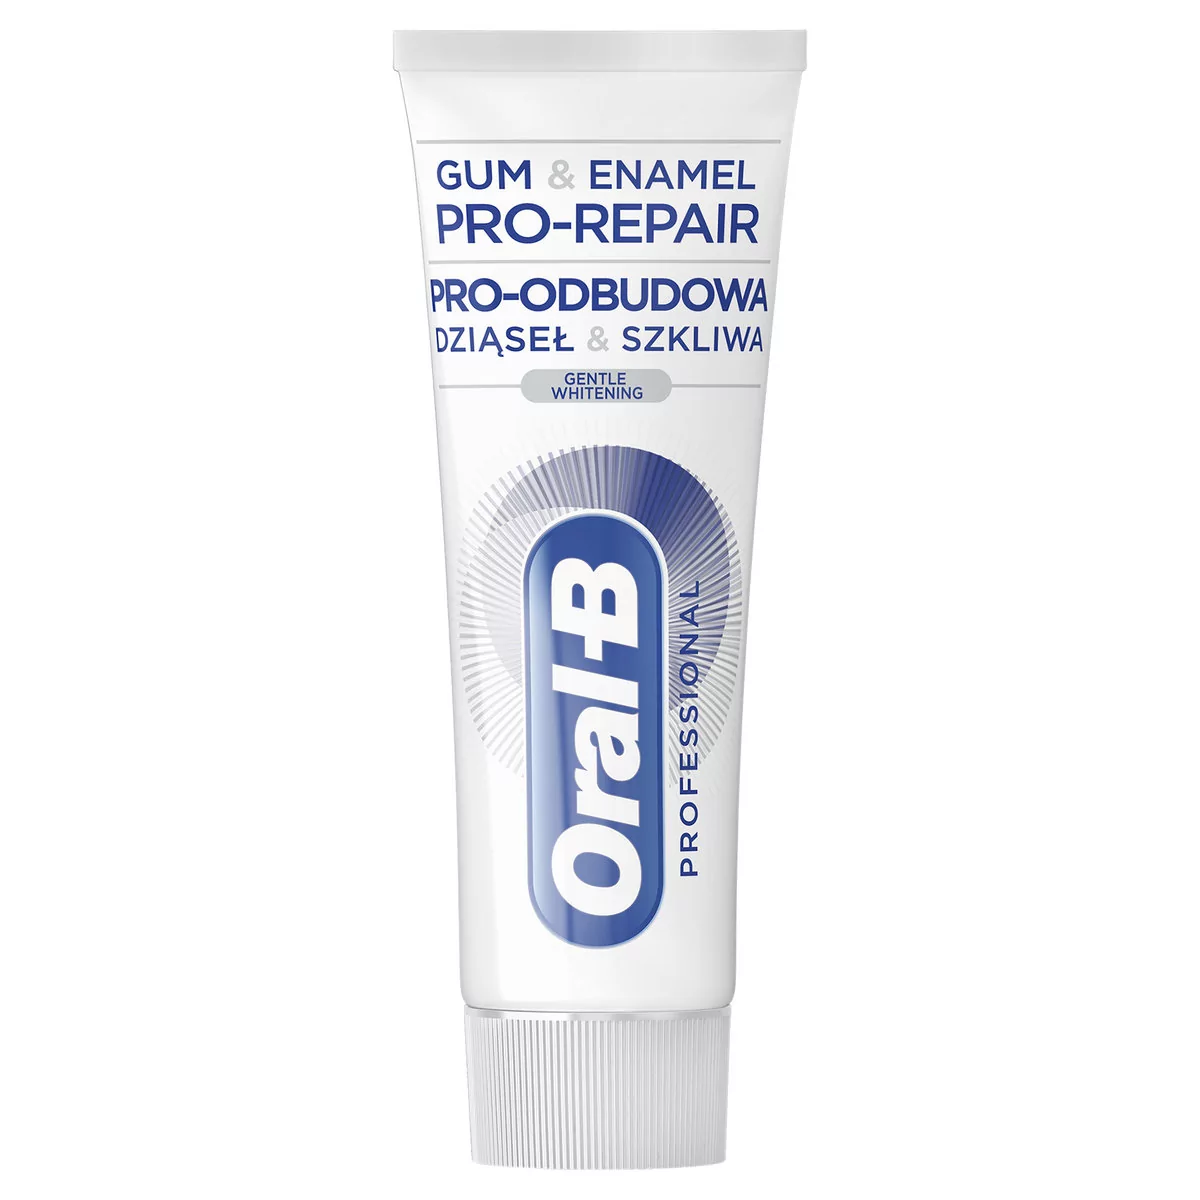 Oral-B pasta Pro-Repair Gum & Enamel Professional - Delikatne wybielanie (Gentle Whitening) 75ml